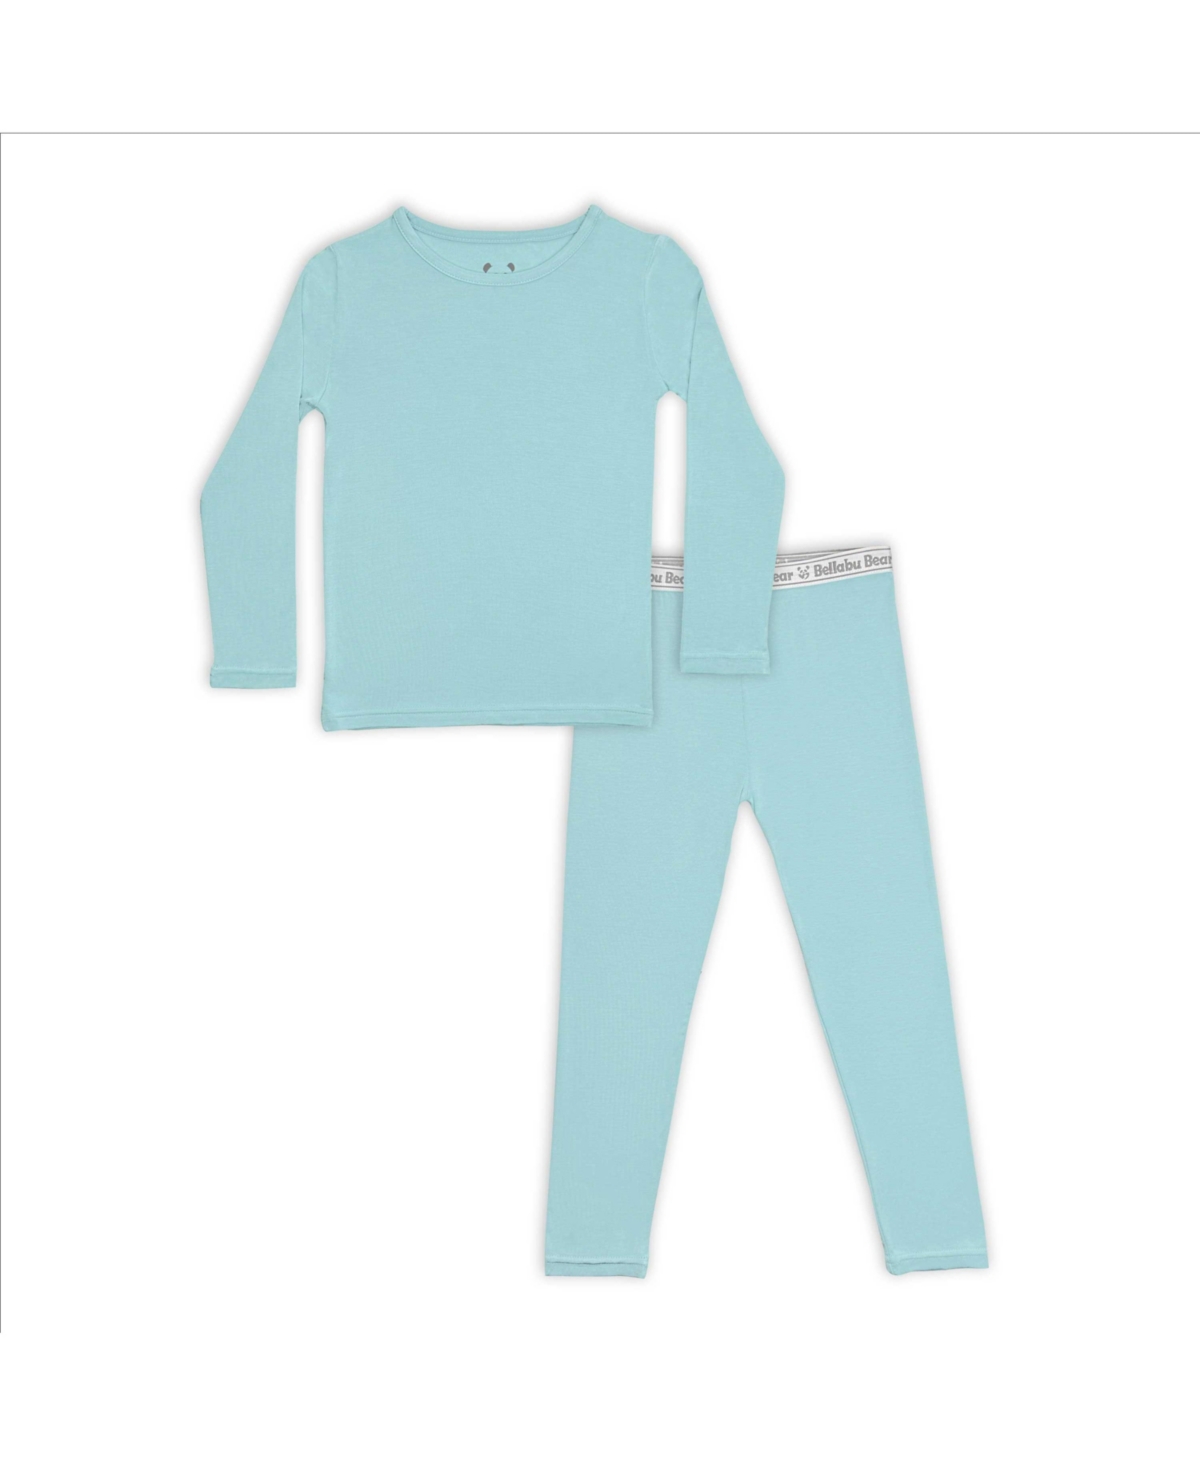 Bellabu Bear Kids' Toddler Unisex Adventure Blue Set Of 2 Piece Pajamas